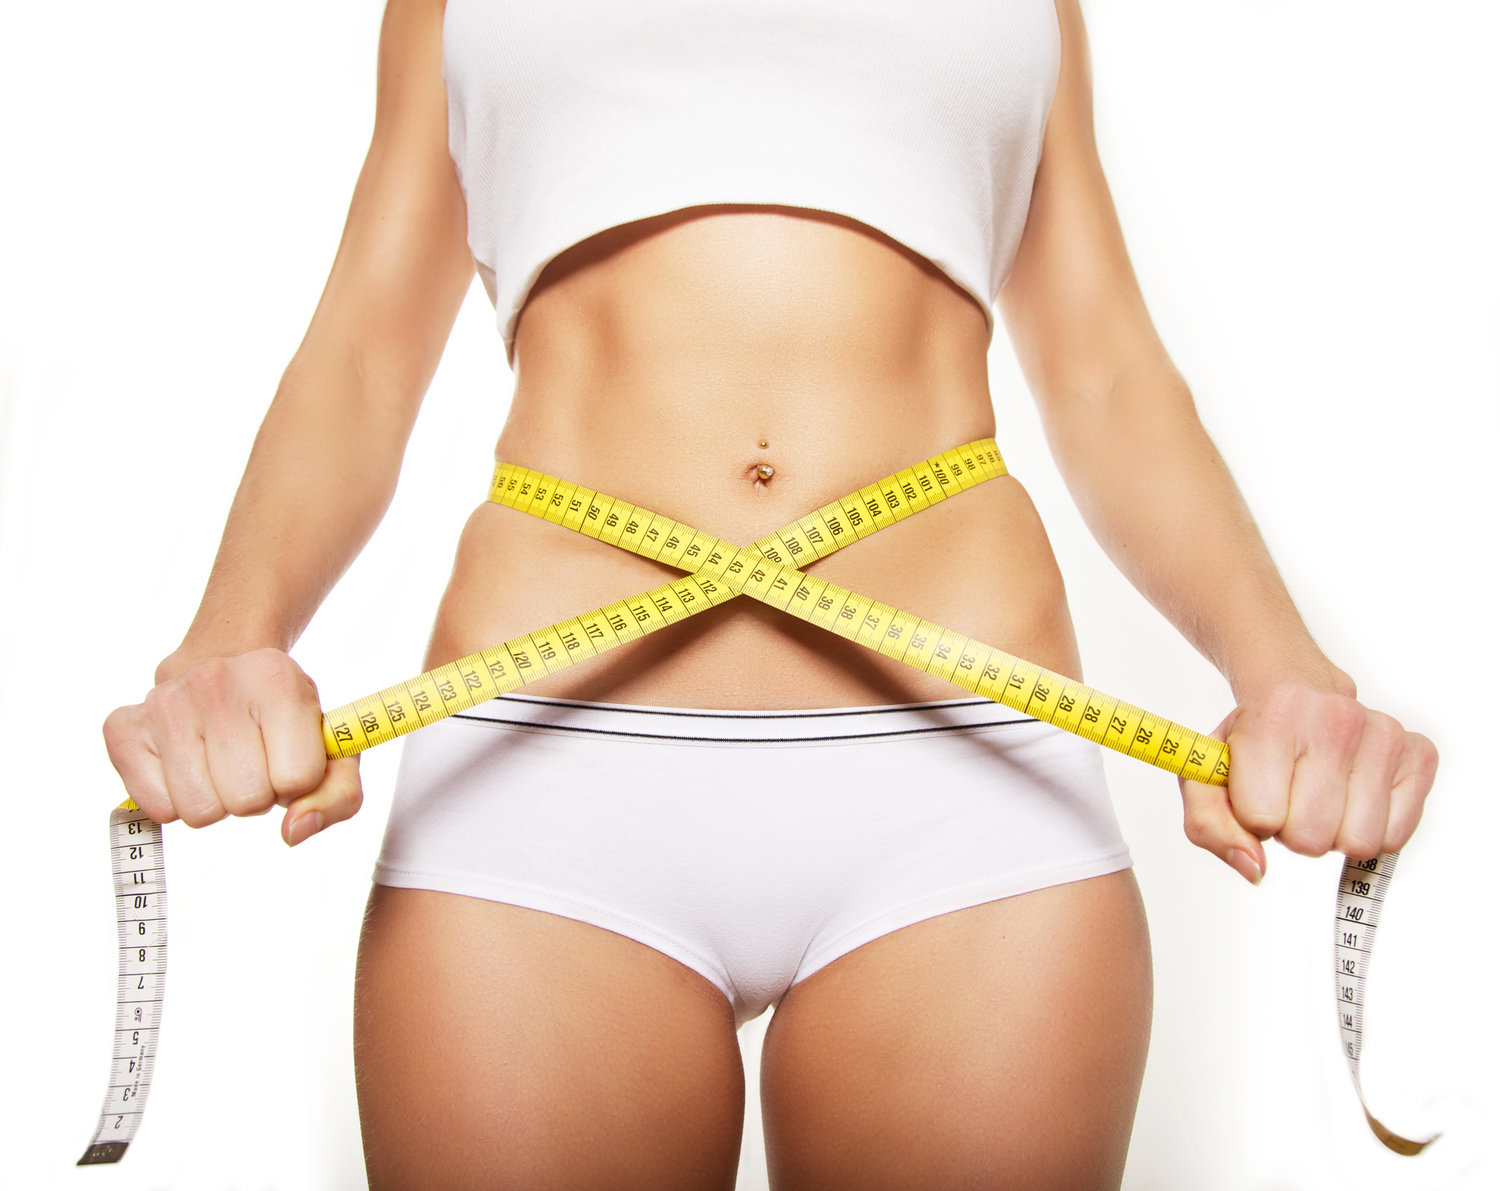 Dieta para reducir grasa corporal